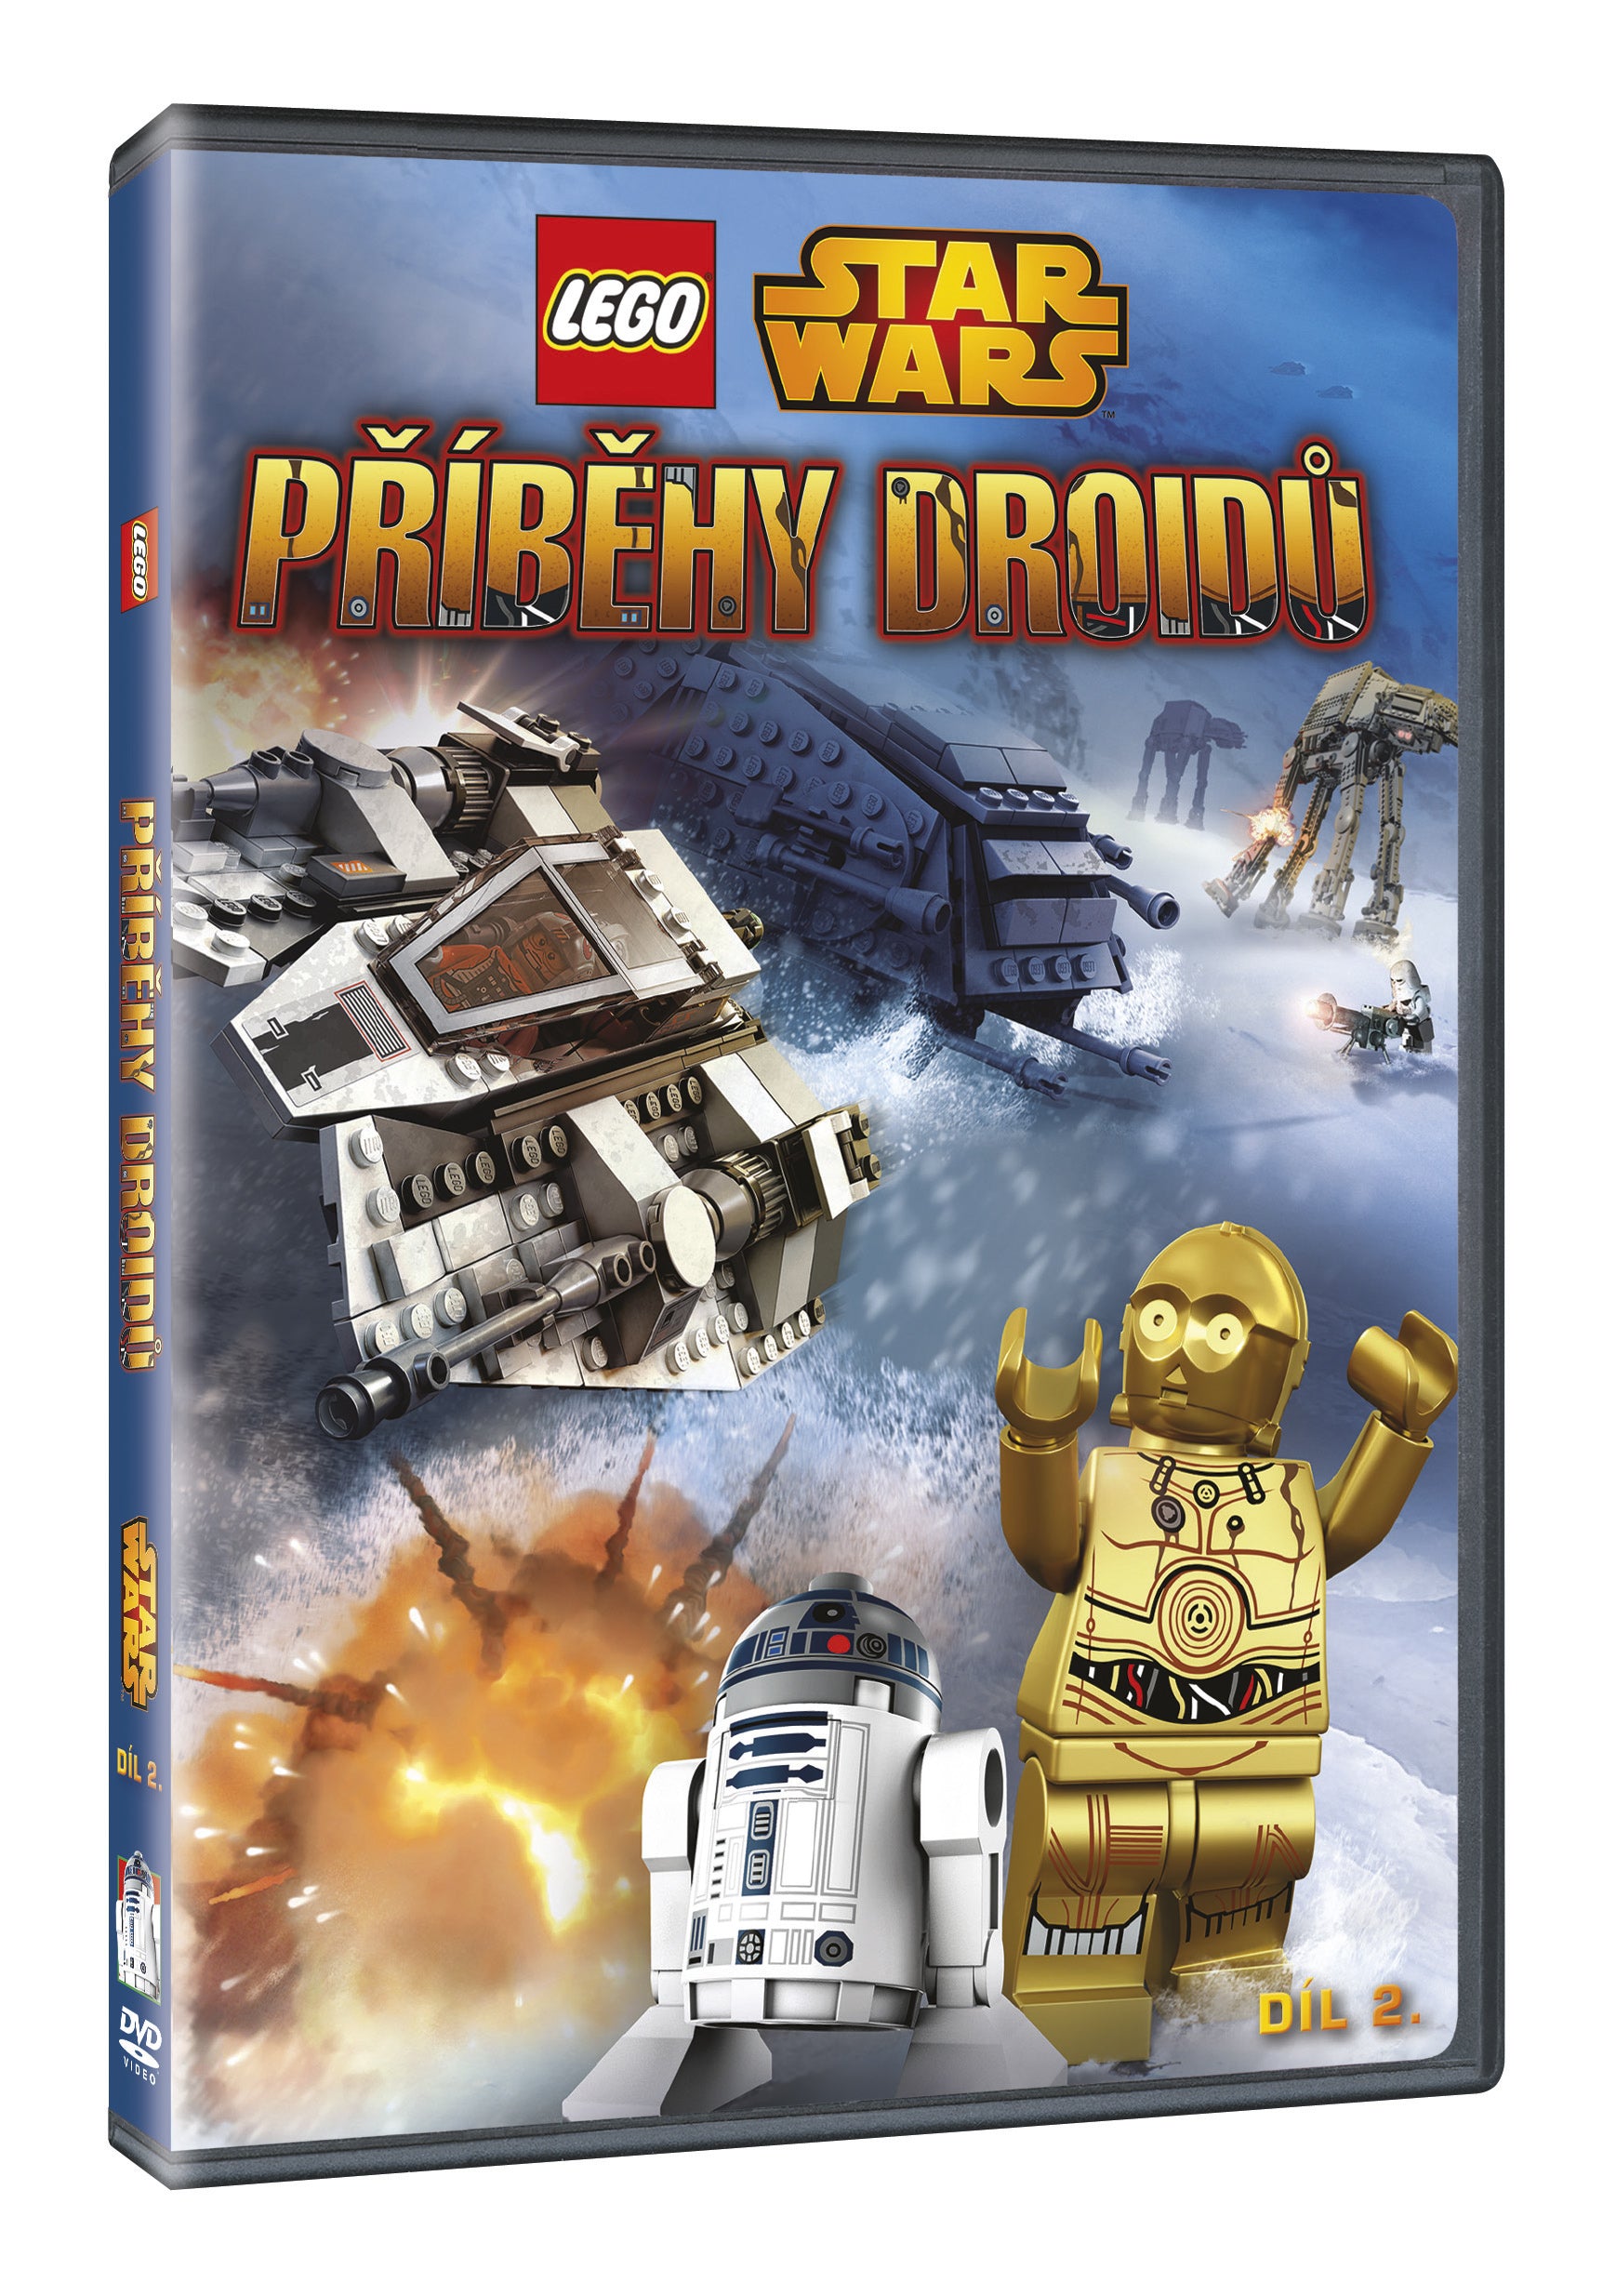 Lego Star Wars: Pribehy droidu 2 DVD / LEGO Star Wars: Droid Tales: Volume 2